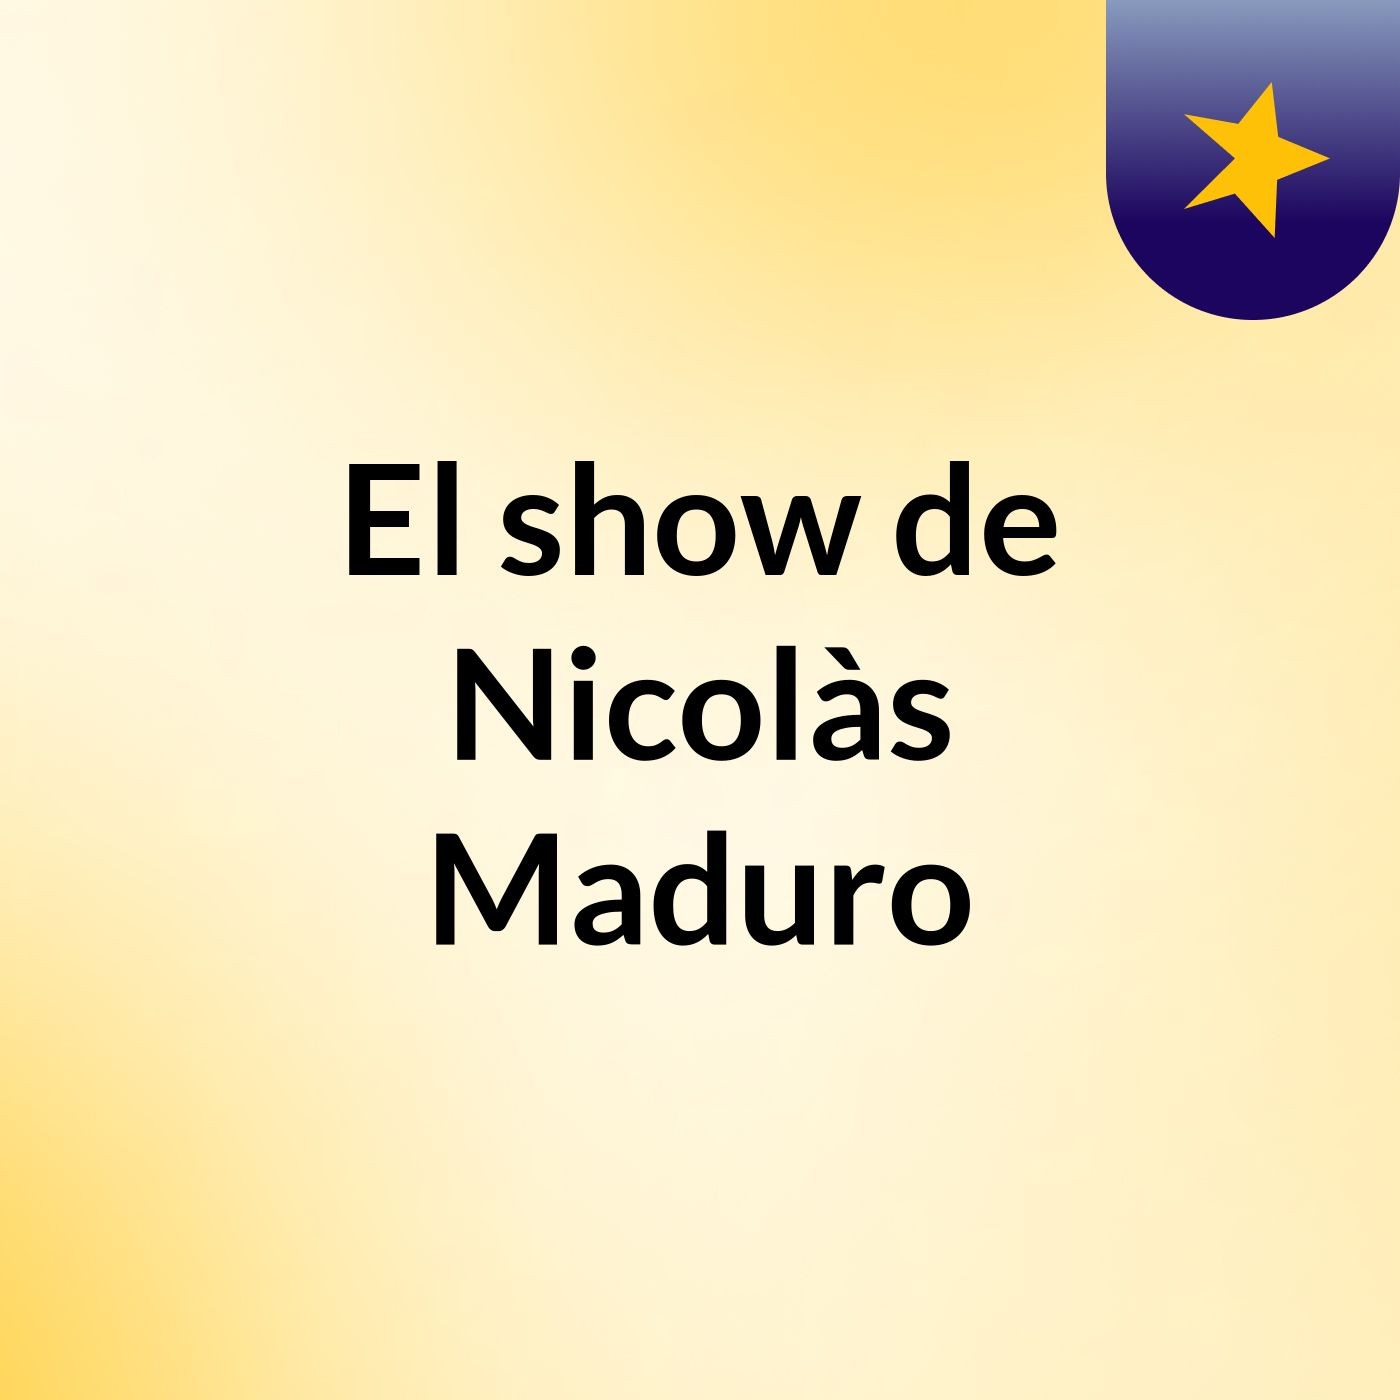 El show de Nicolàs Maduro